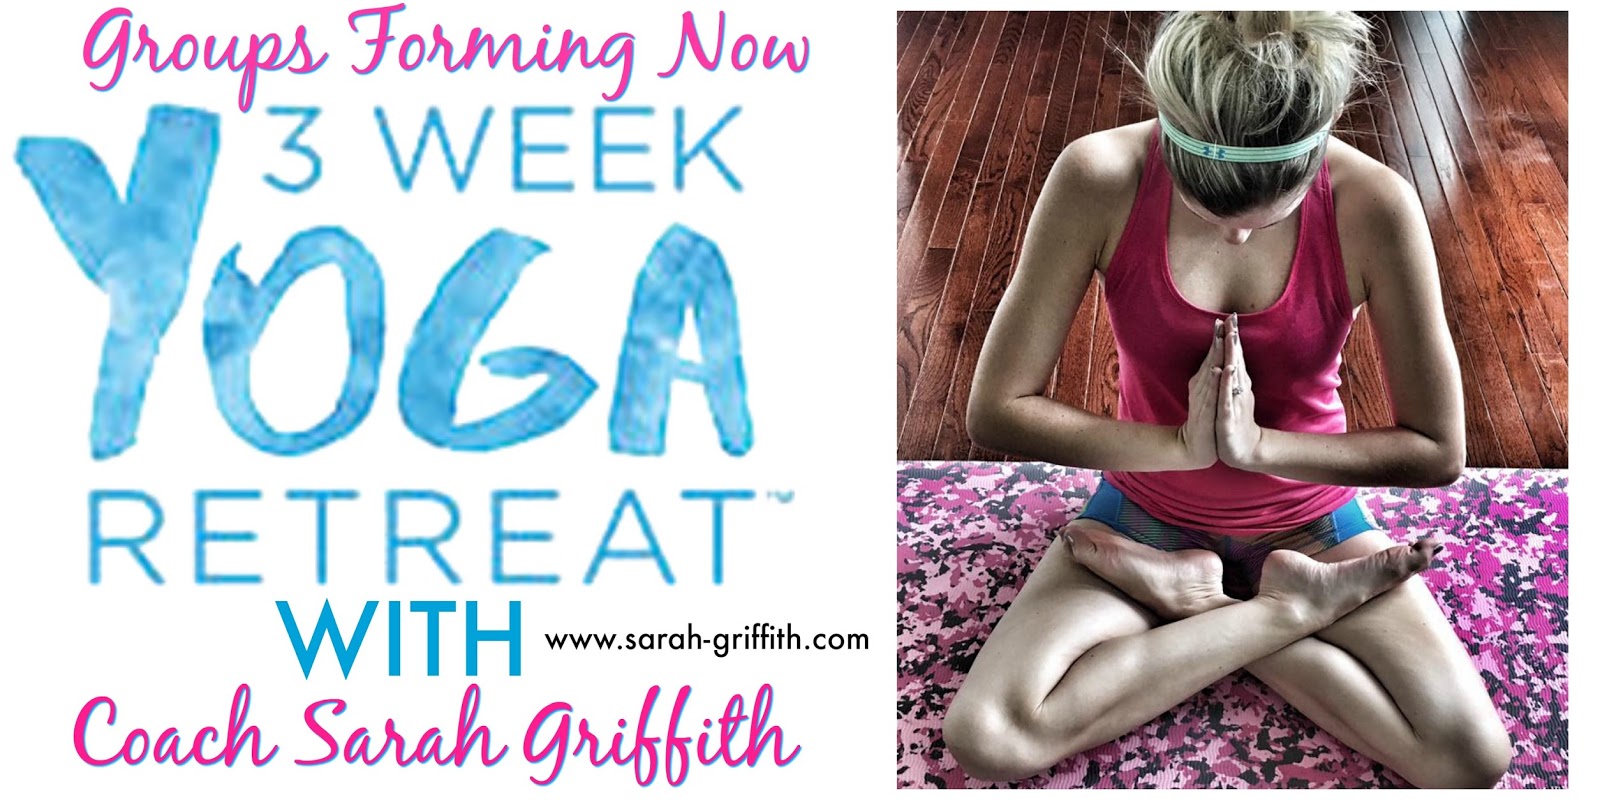 sarah-griffith-3-week-yoga-retreat